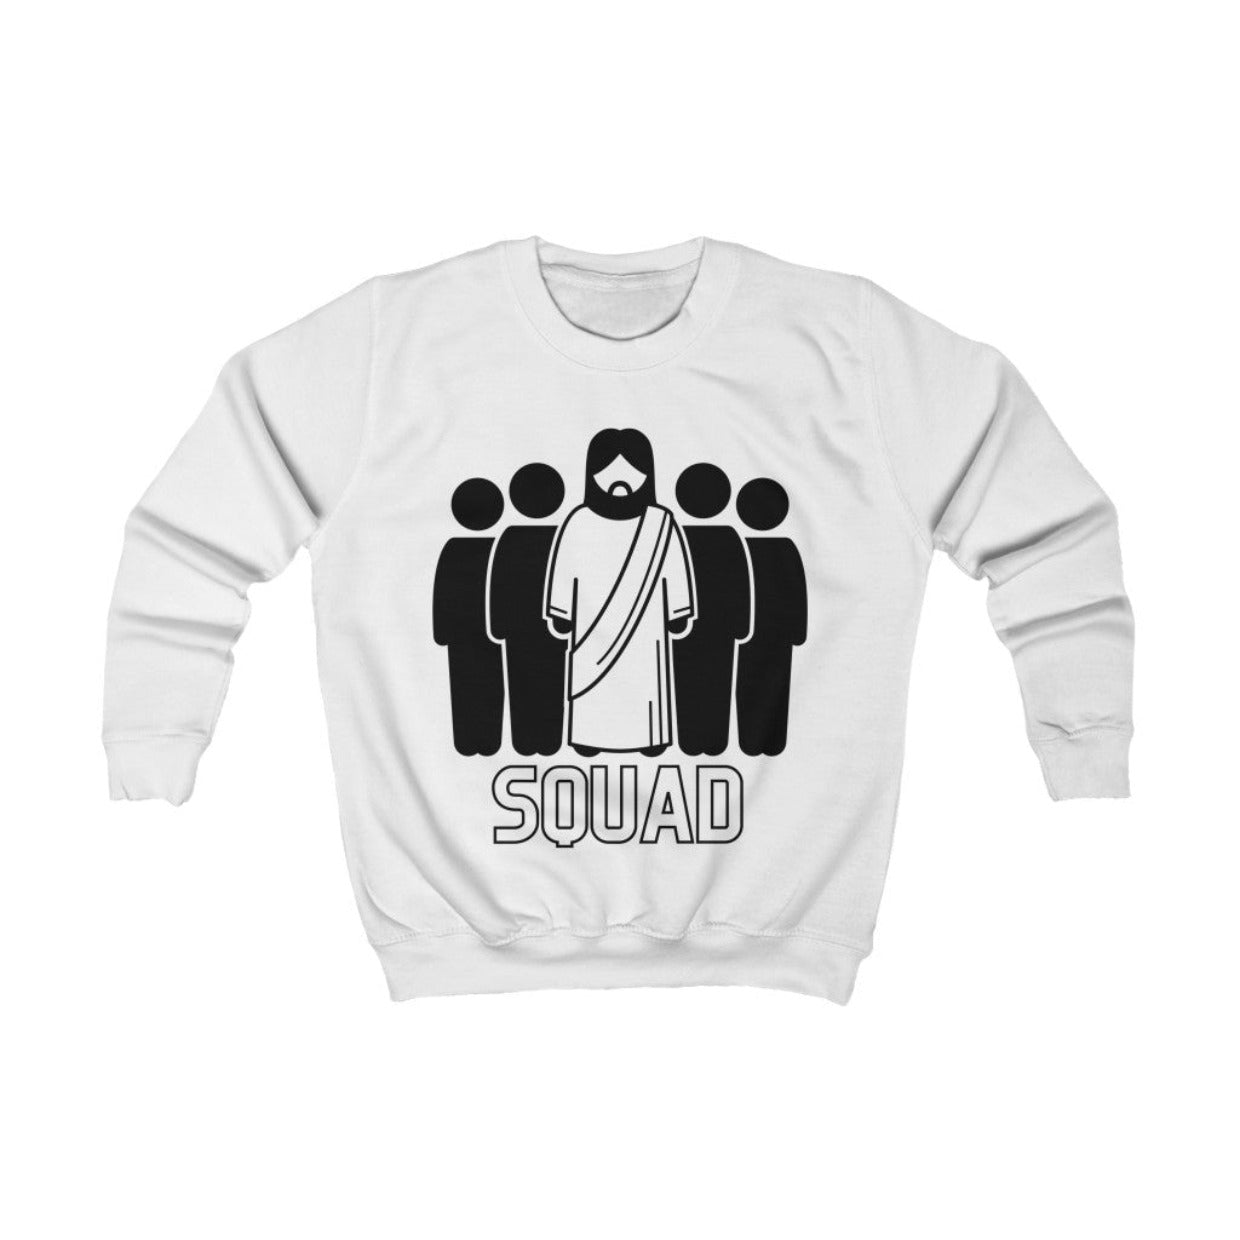 Squad - Youth Sweatshirt | LifeSpring Shirts - LifeSpring Shirts